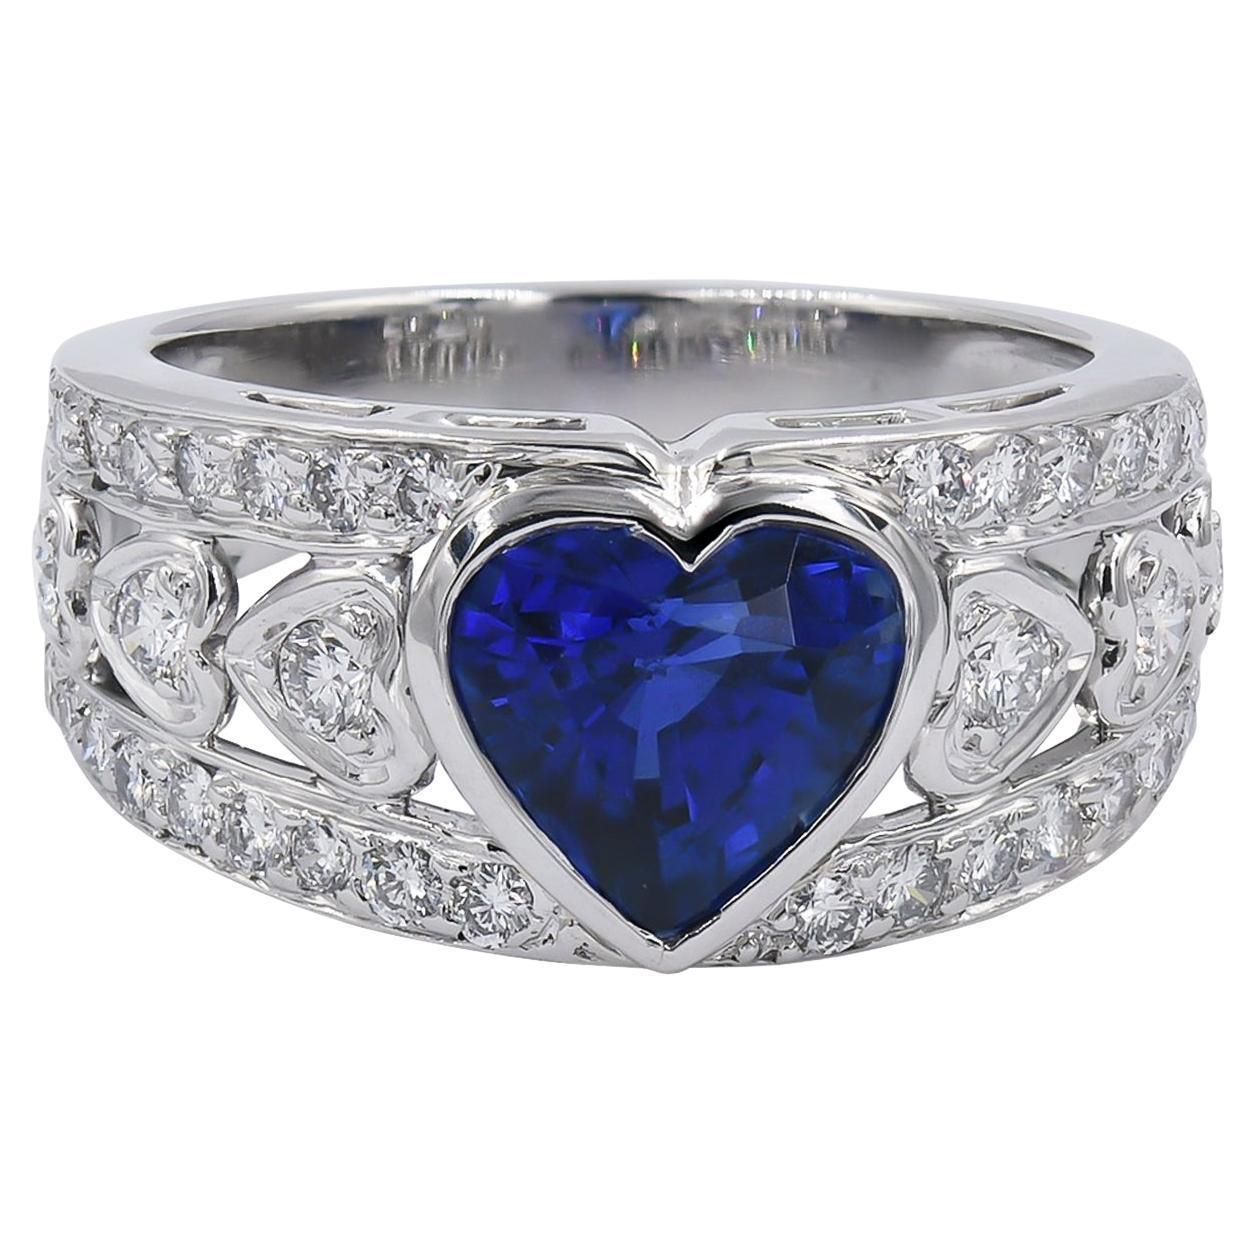 Harry Winston AGL Certified 2.65 Carat Sapphire Diamond Ring